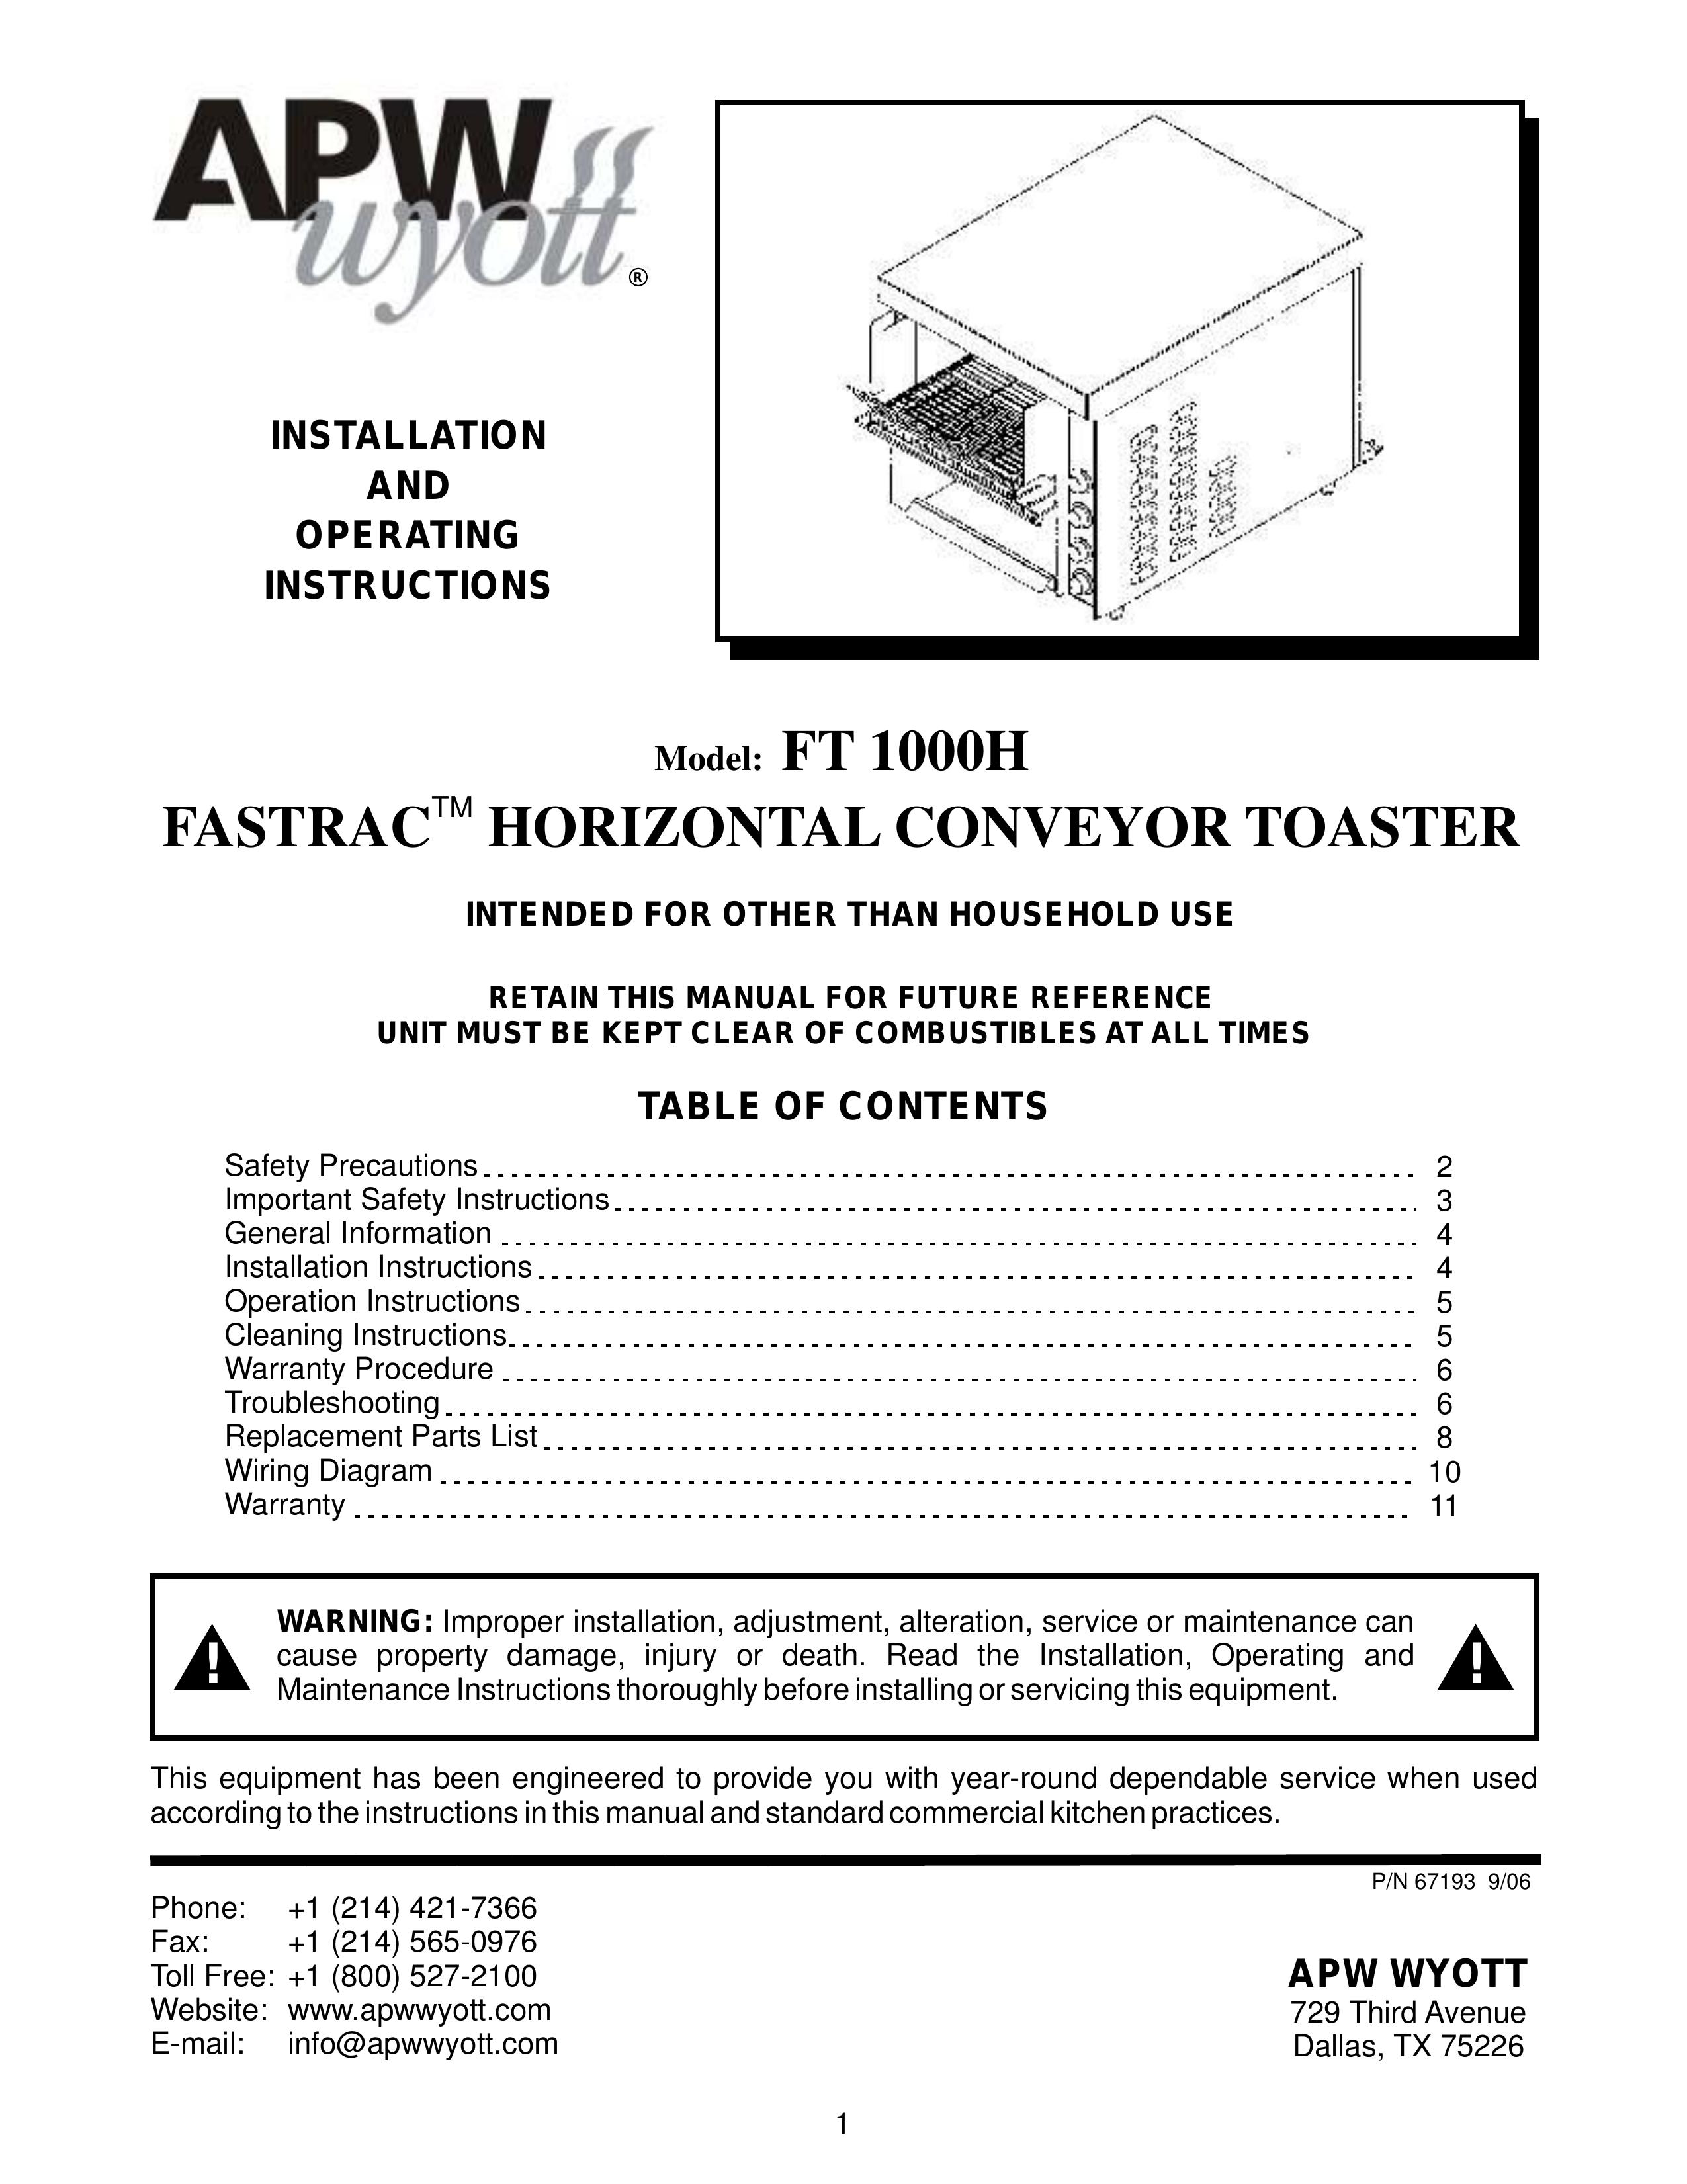 APW Wyott FT1000H Toaster User Manual